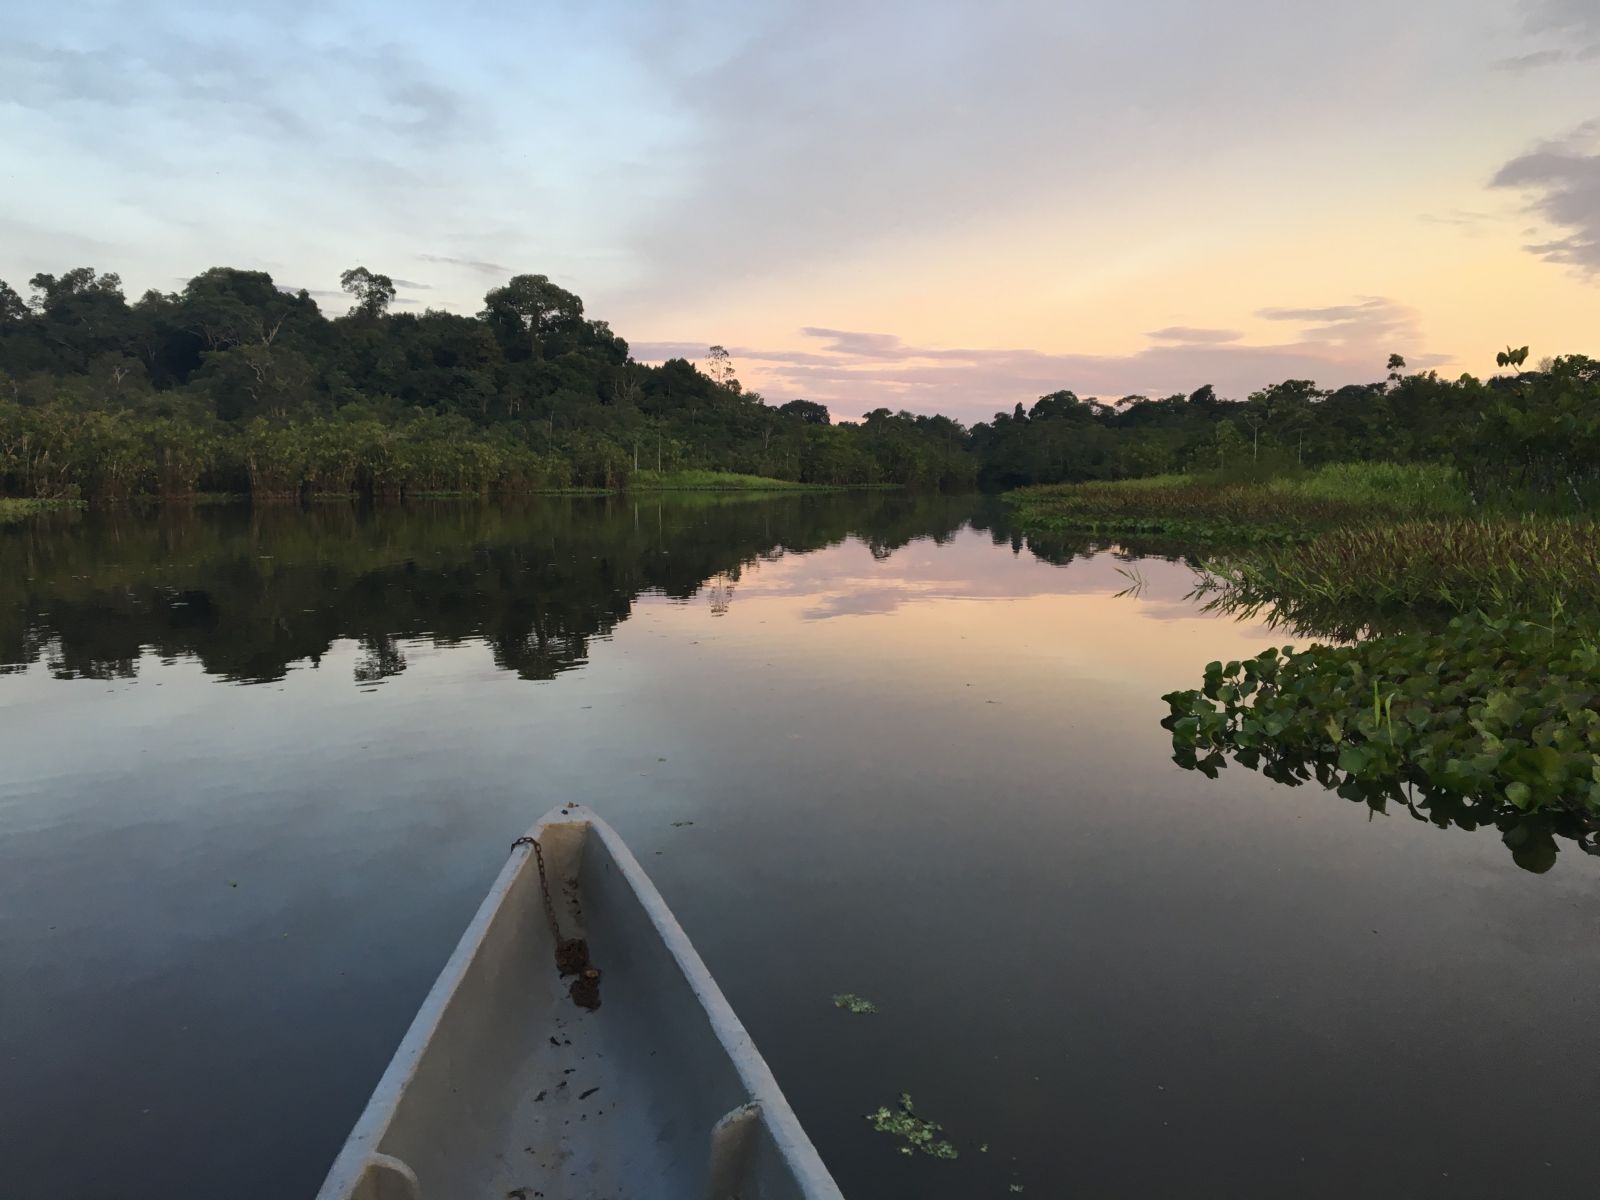 Canoe approach into Sani Lodge Amazon